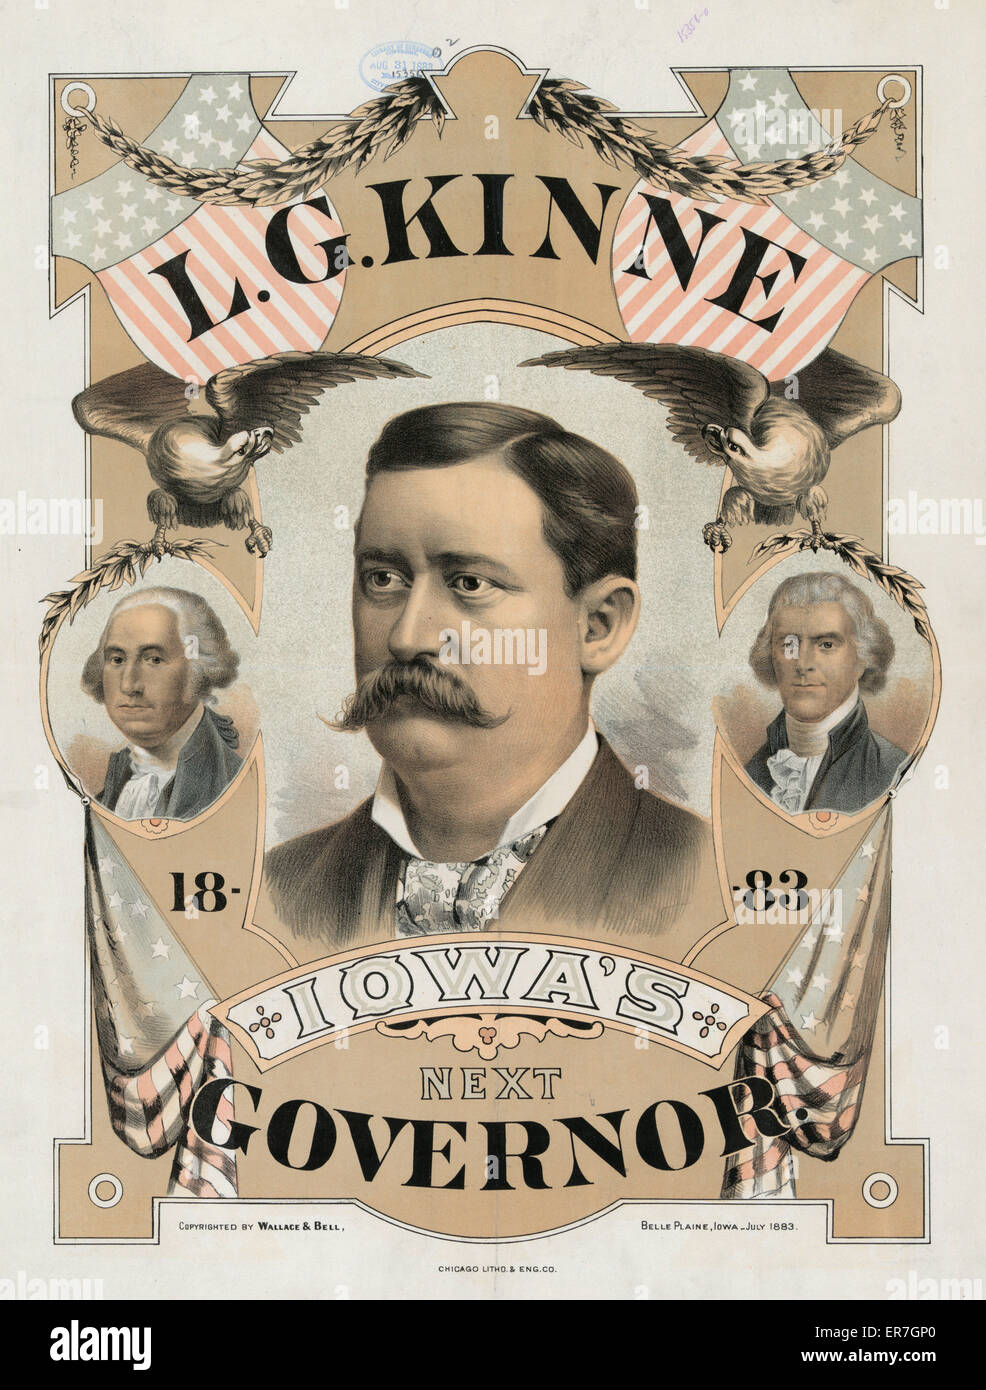 L.G. Kinne del próximo gobernador de Iowa Foto de stock